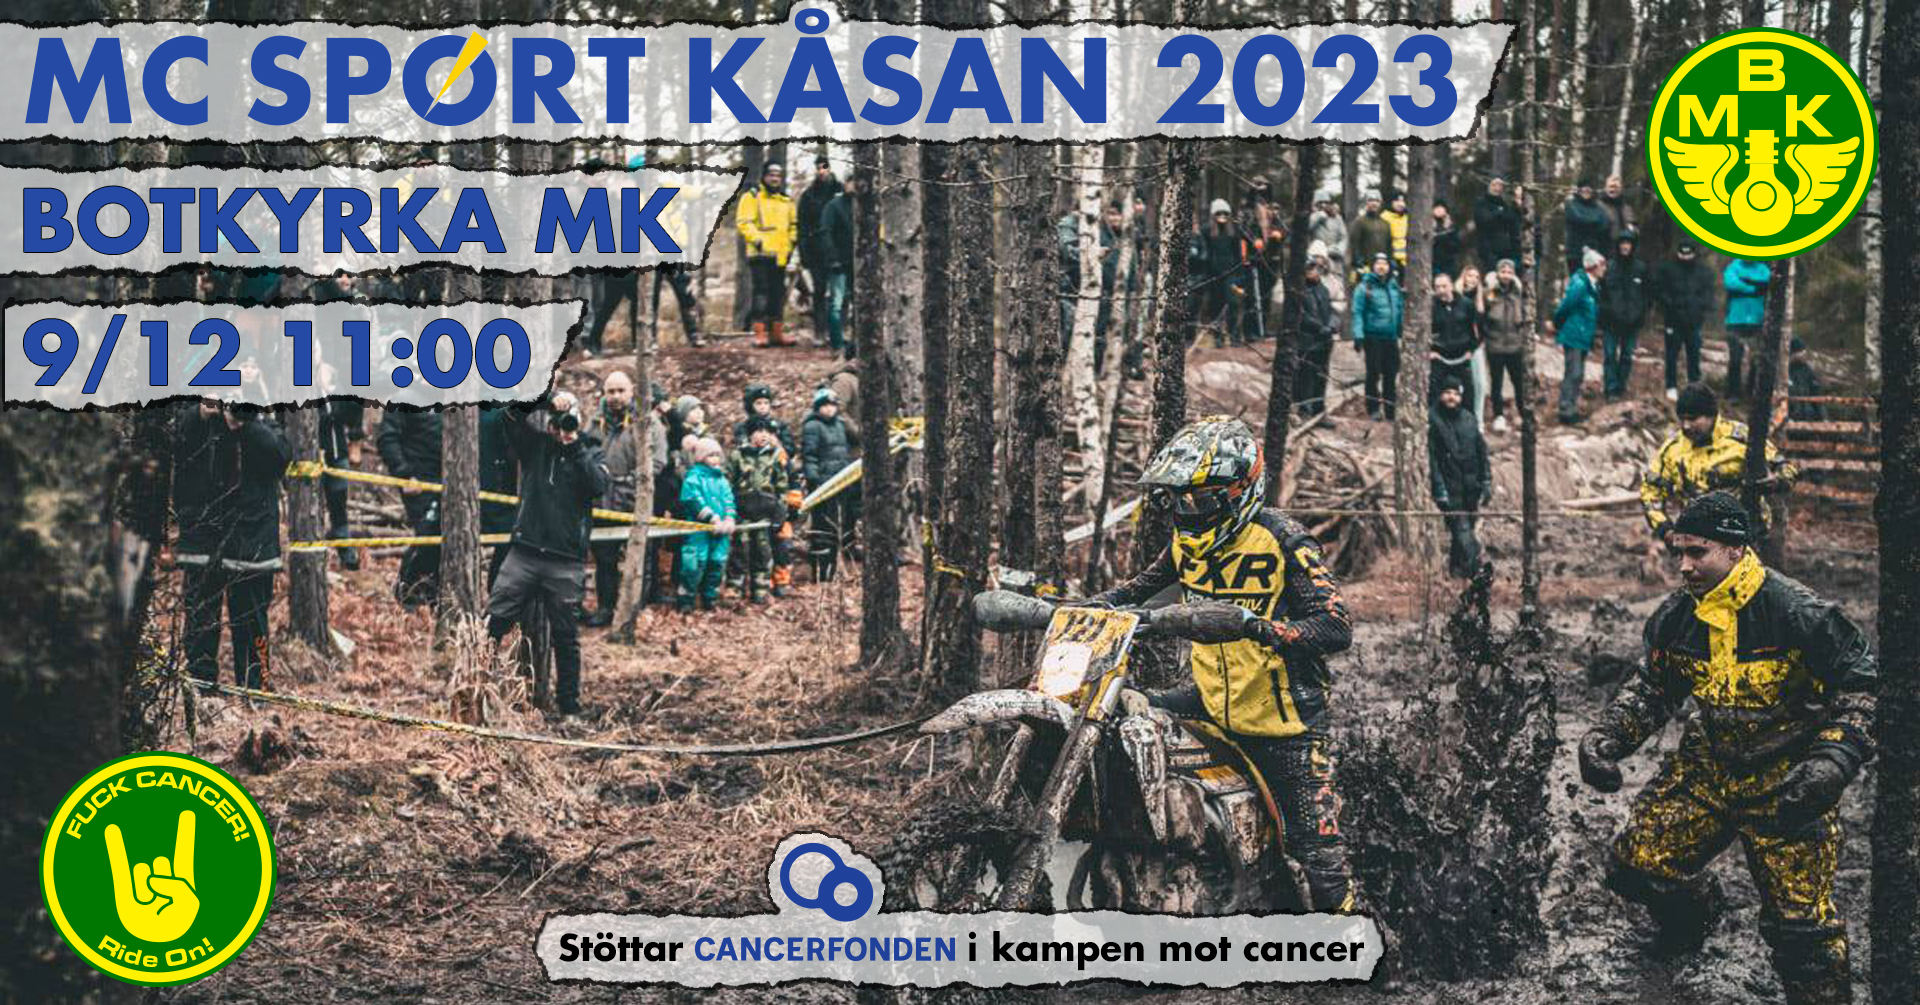 MC Sport Kåsan 2023